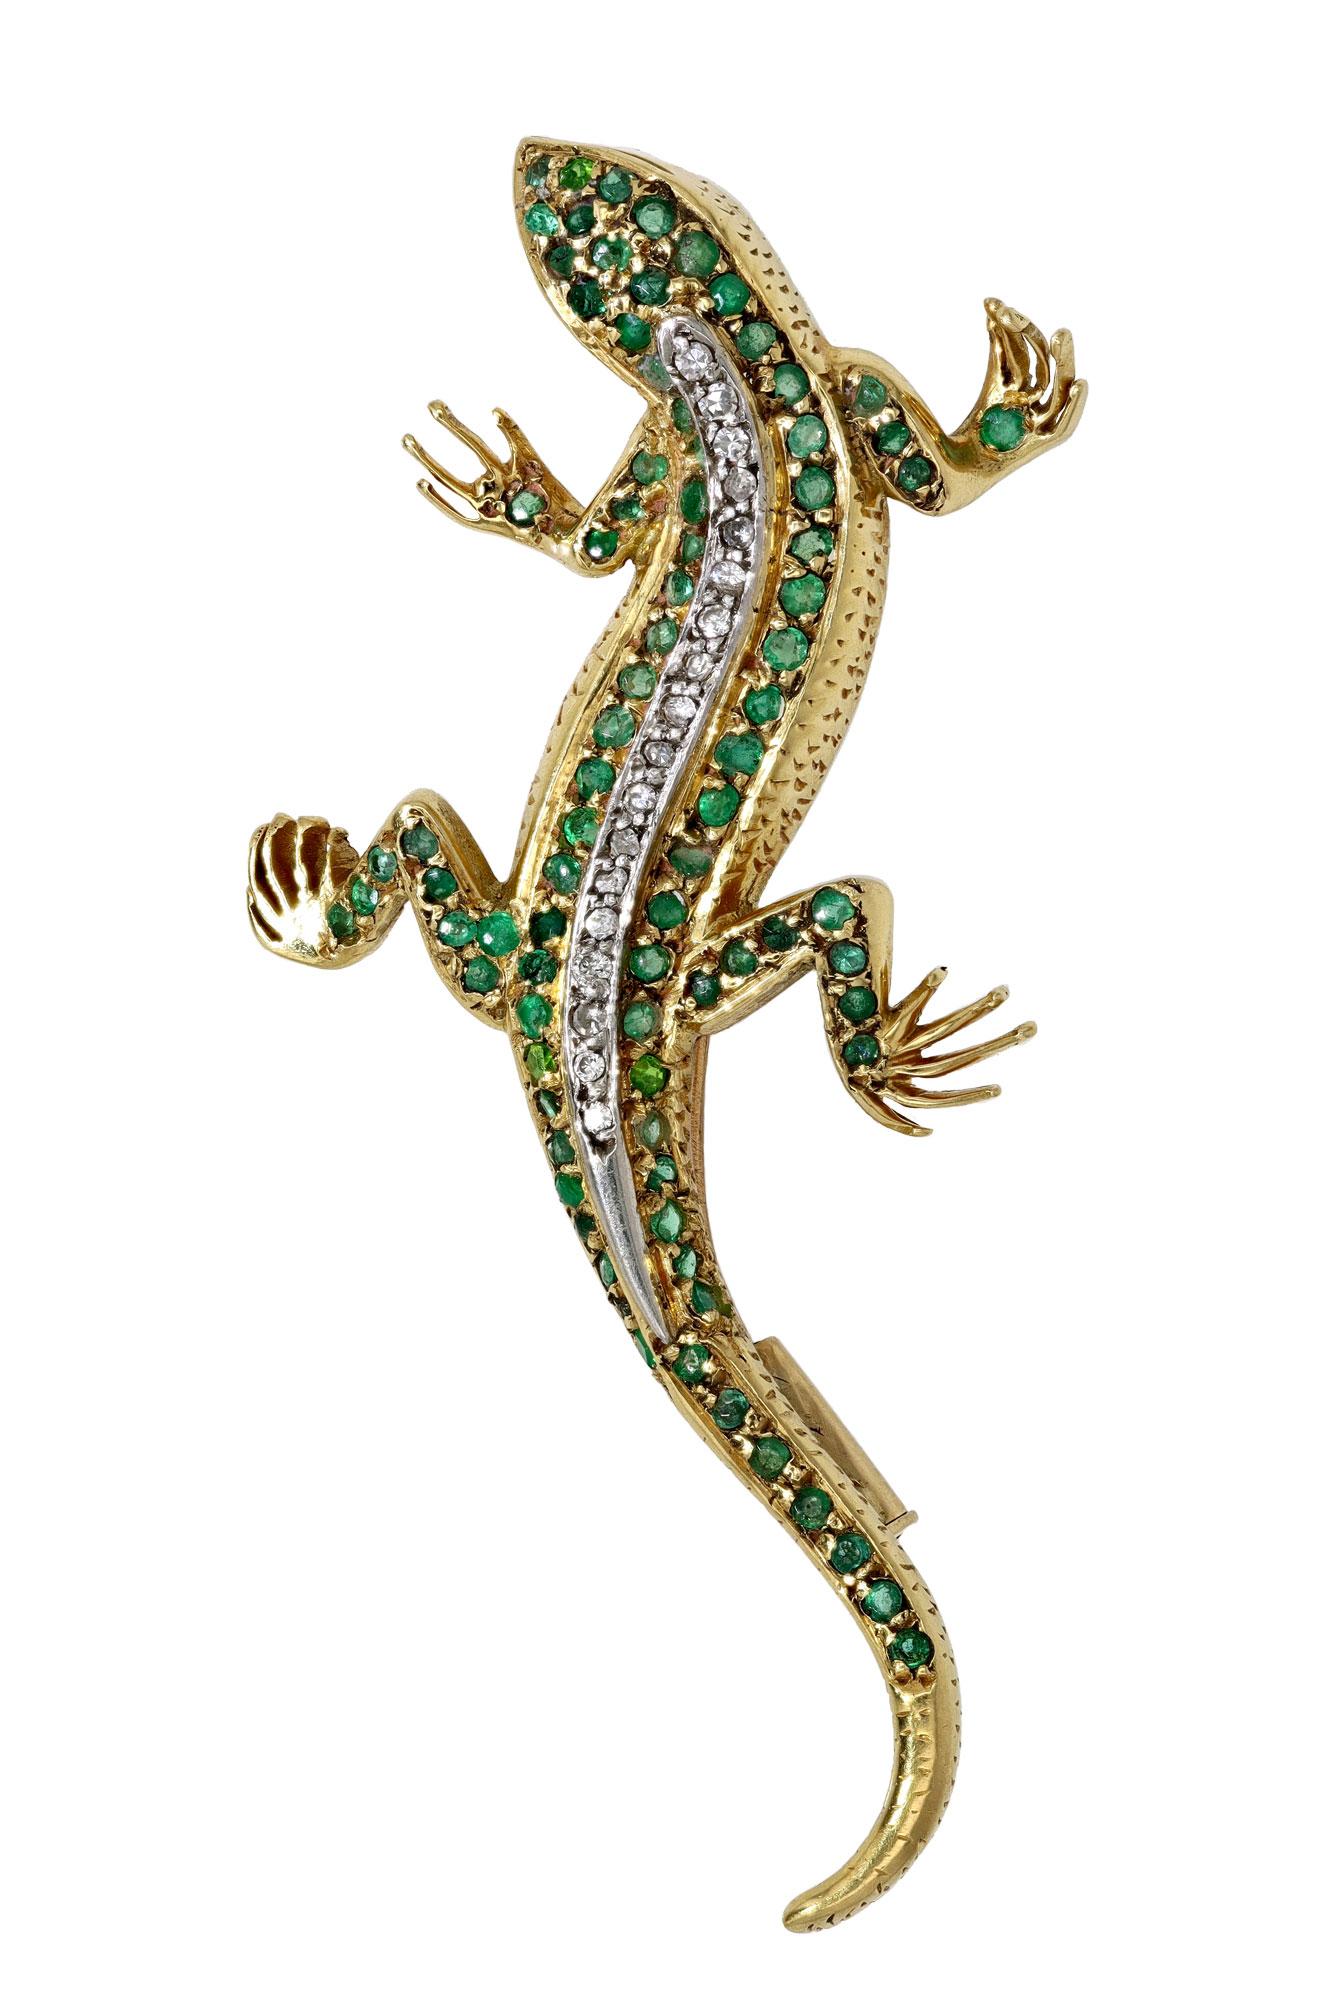 Antique Victorian Emerald Lizard Brooch Pin In Good Condition For Sale In Santa Barbara, CA